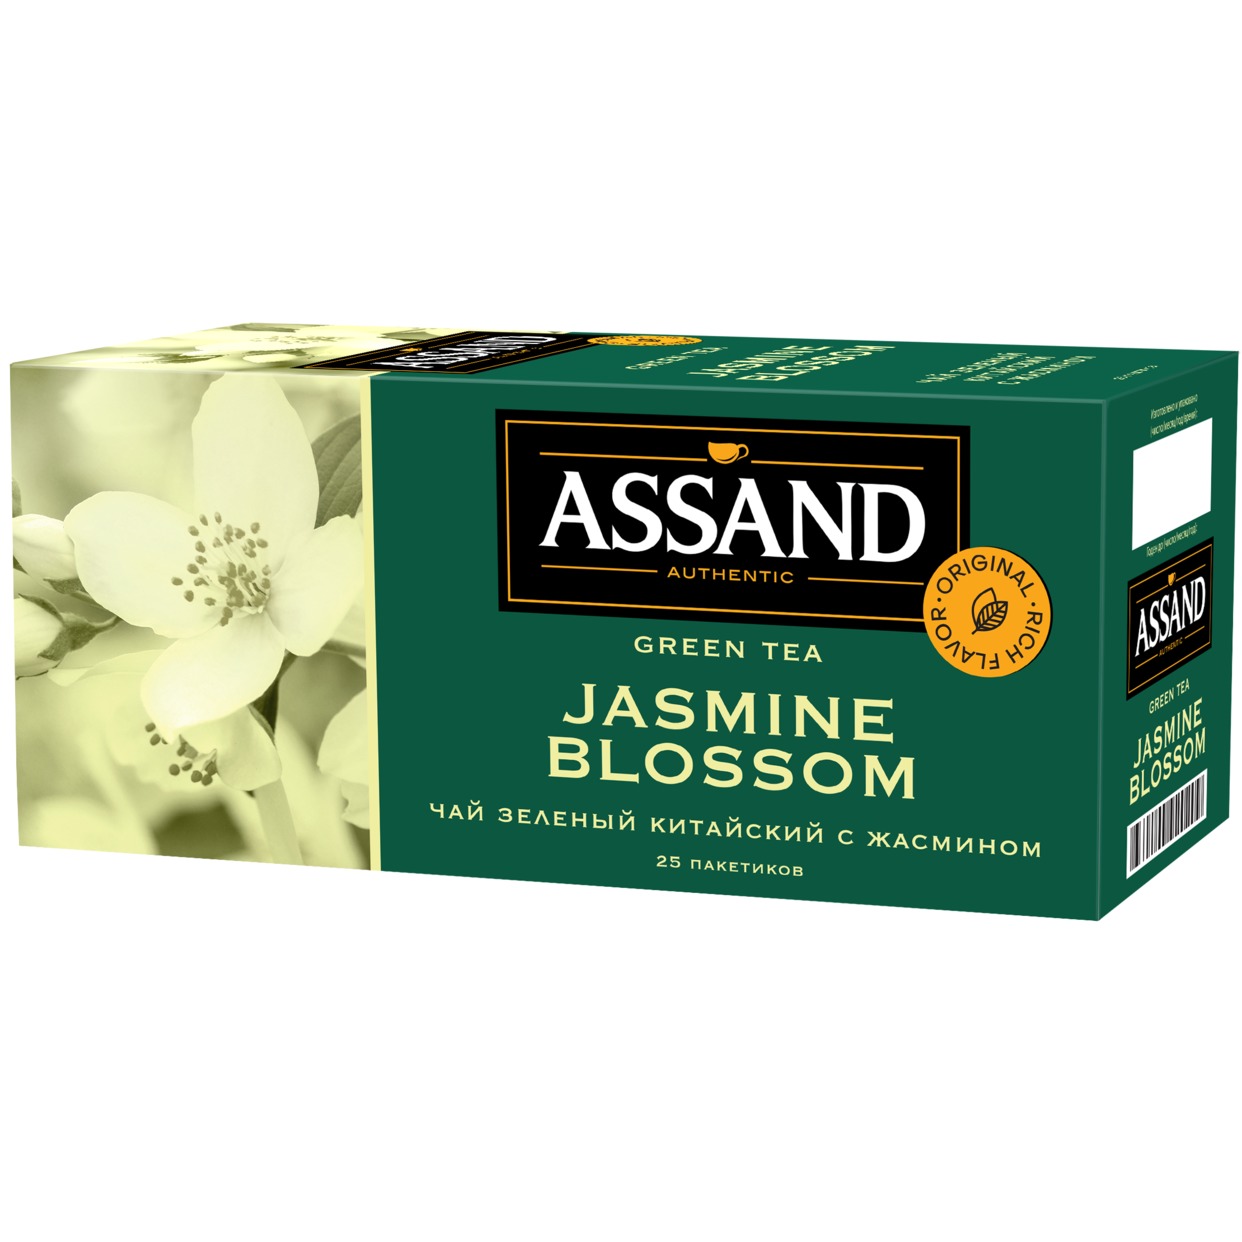 ЧАЙ ЗЕЛЕНЫЙ КИТАЙСКИЙ С ЖАСМИНОМ « GREEN TEA JASMINE Blossom» "ASSAND" 25х2г